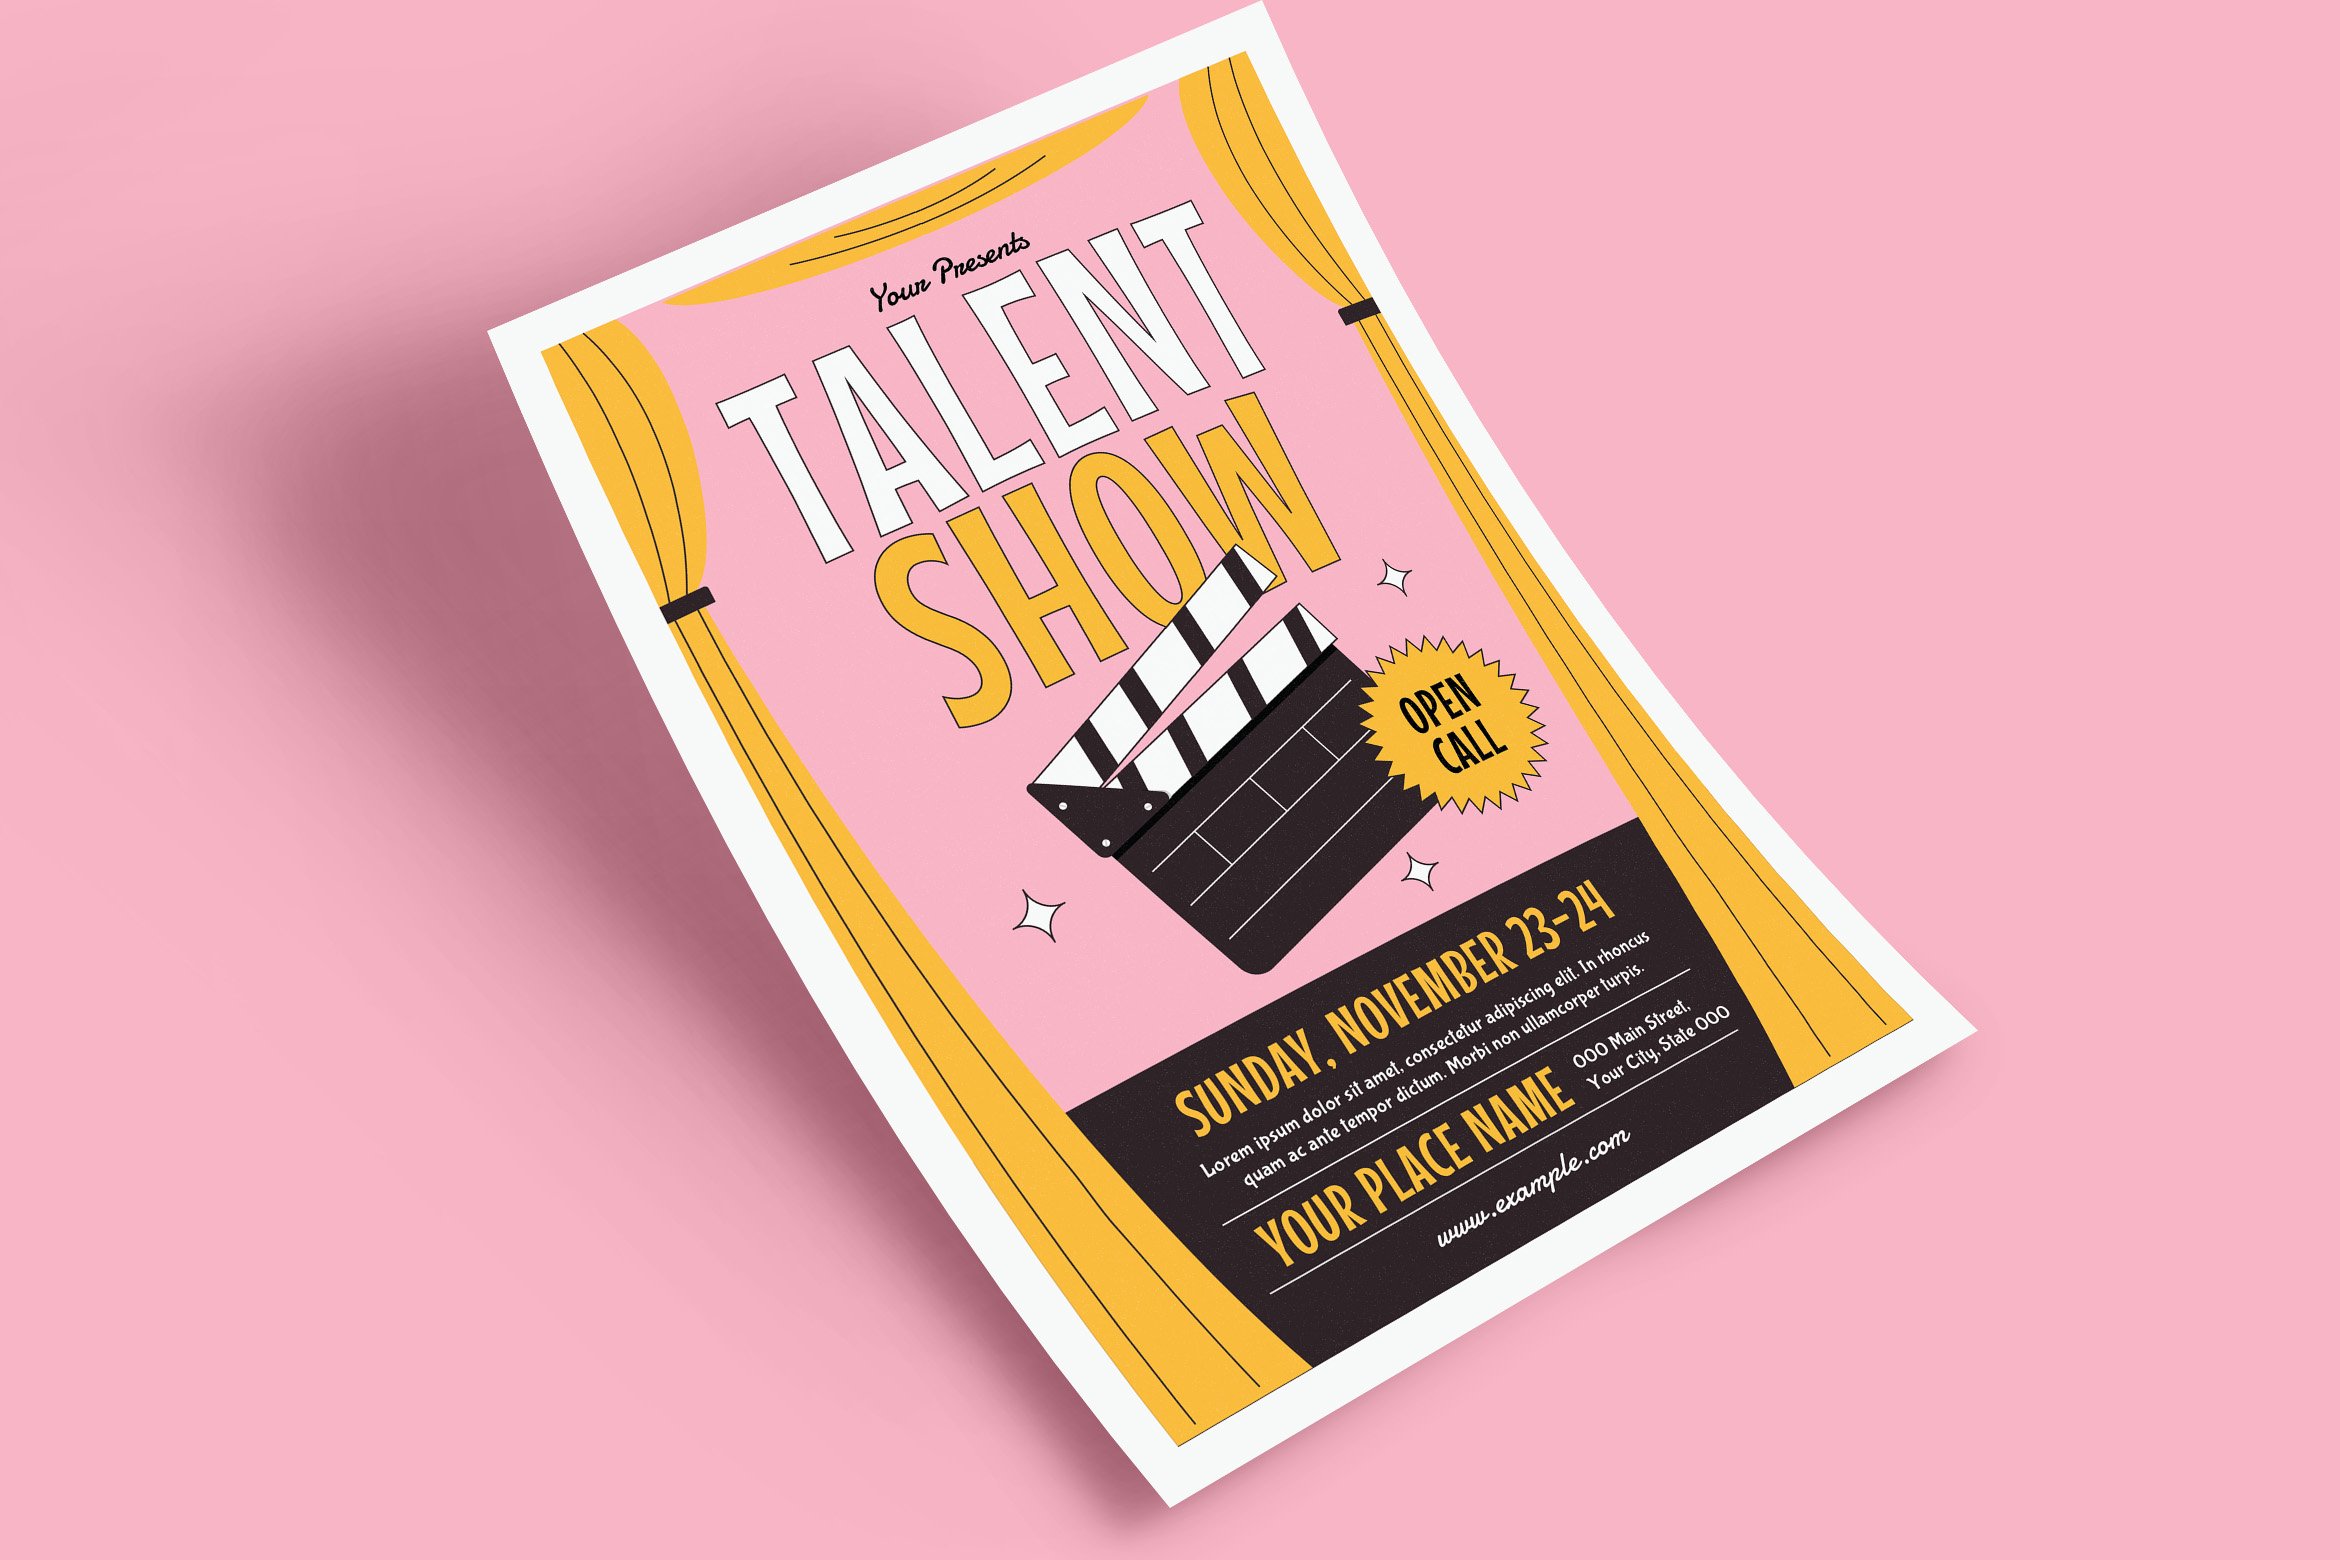 Retro Talent Show Event Flyer preview image.